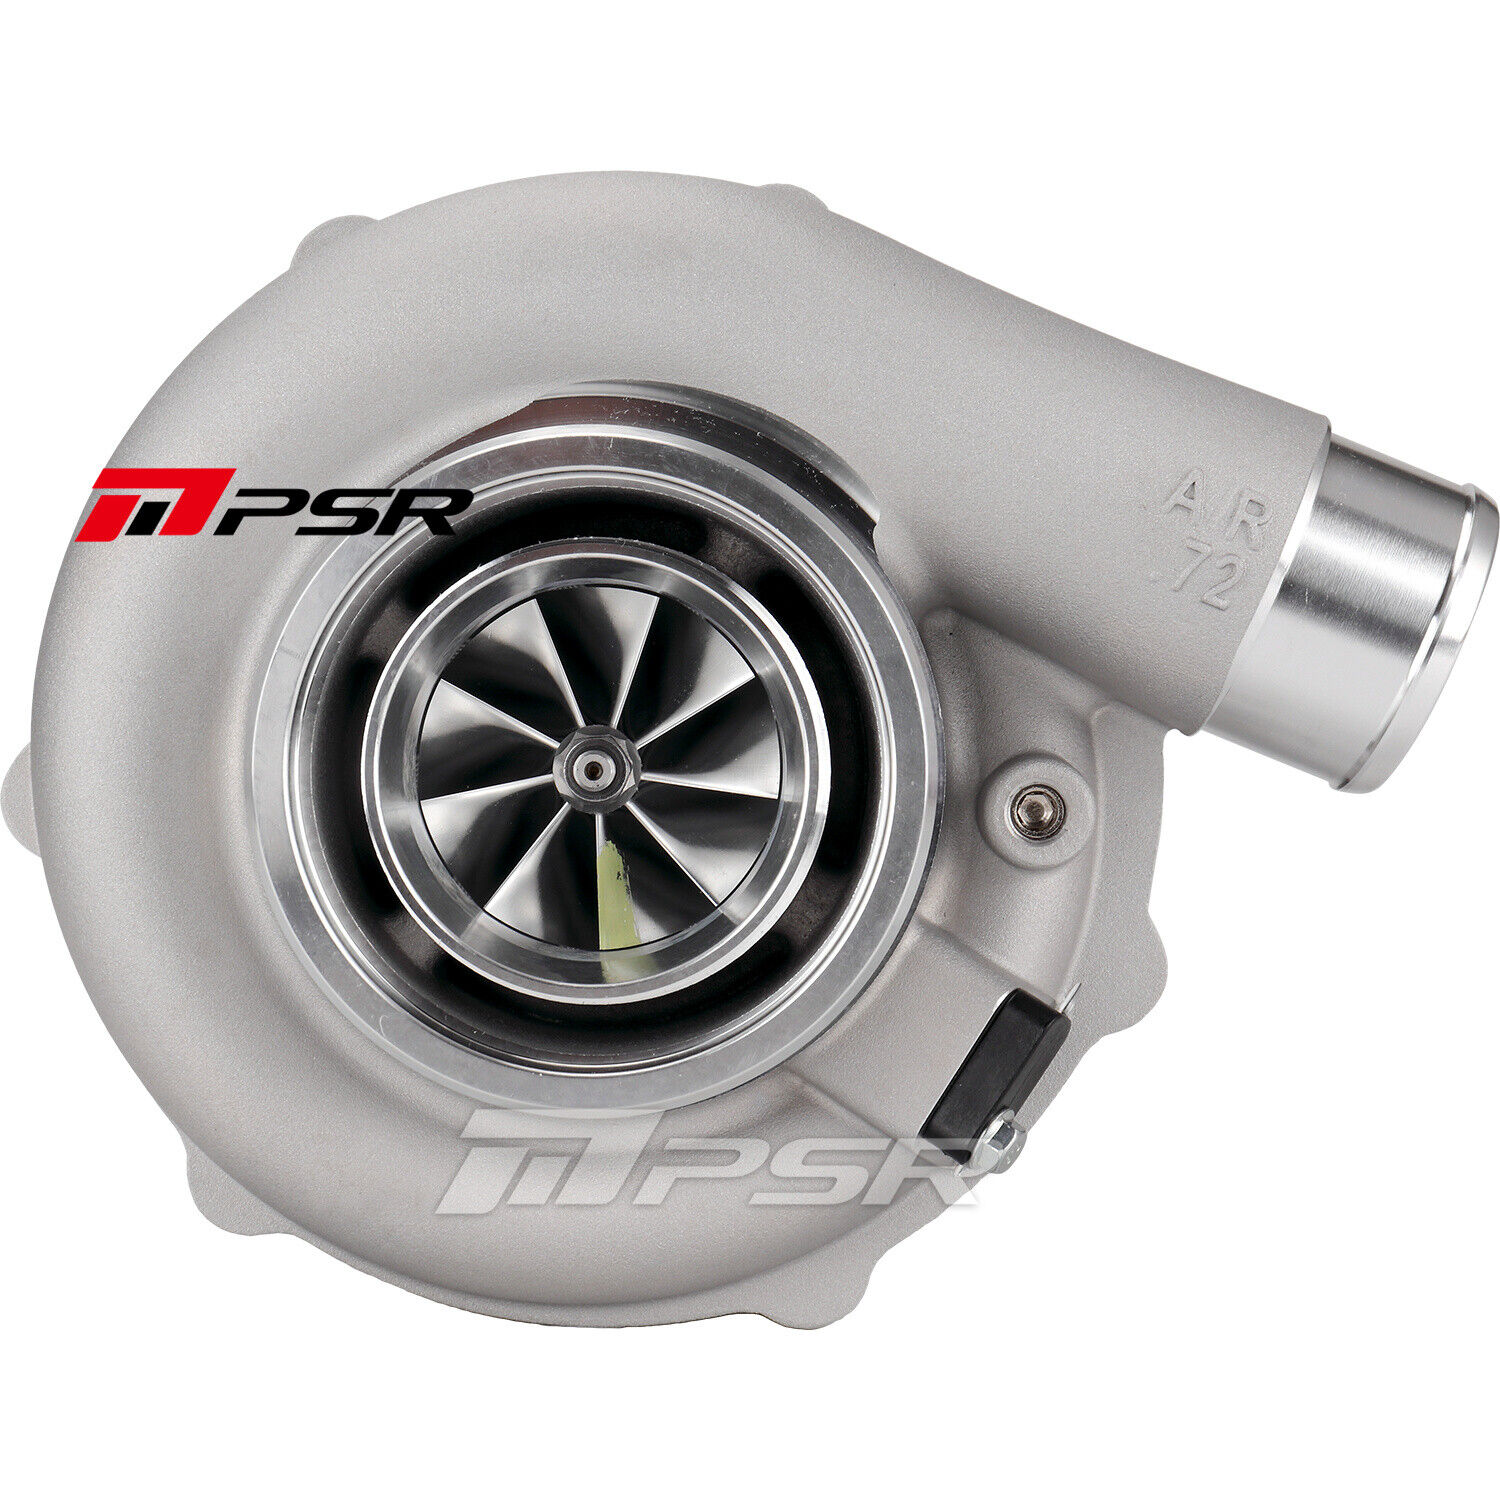 Pulsar 5855G Ceramic Dual Ball Bearing Turbo Billet Compressor 1.01A/R Vband